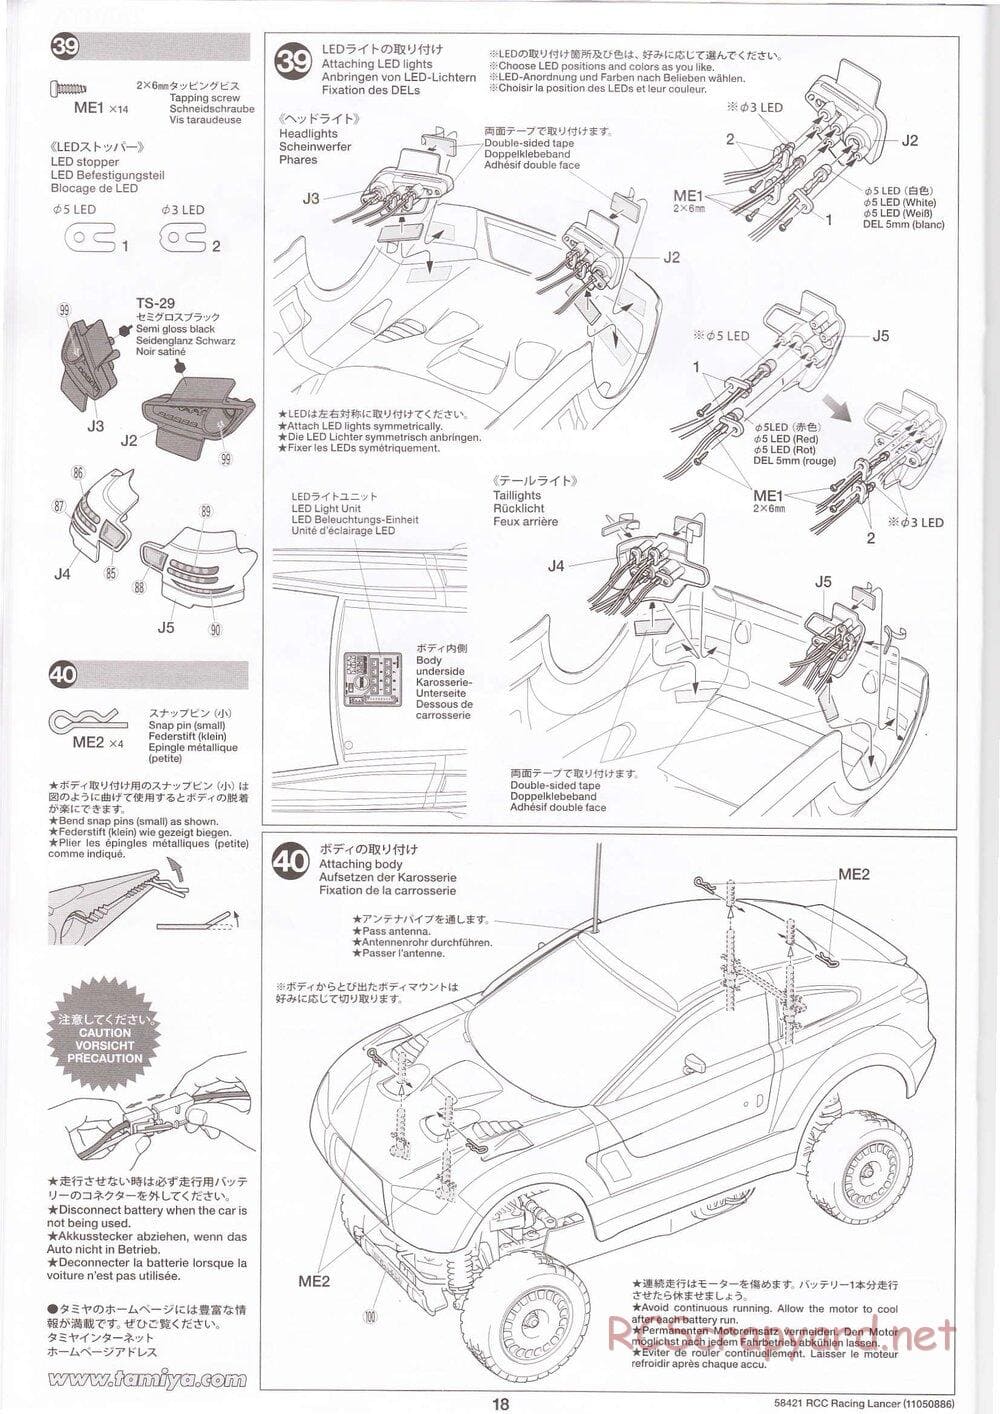 Tamiya - Mitsubishi Racing Lancer - DF-01 Chassis - Manual - Page 18